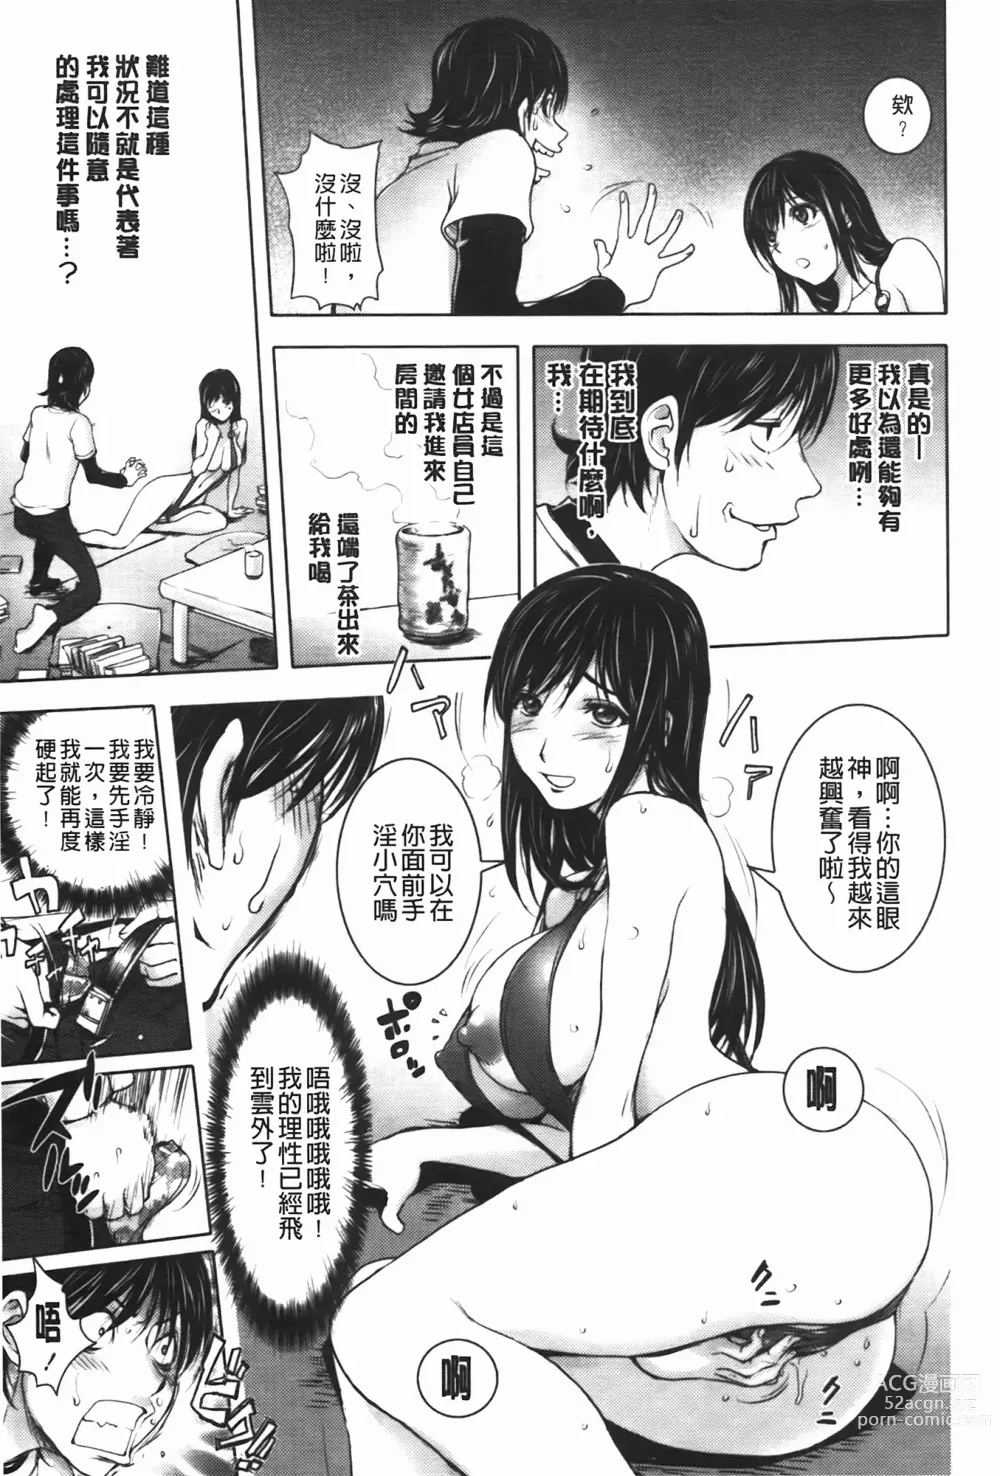 Page 11 of manga Midara Books 1-4